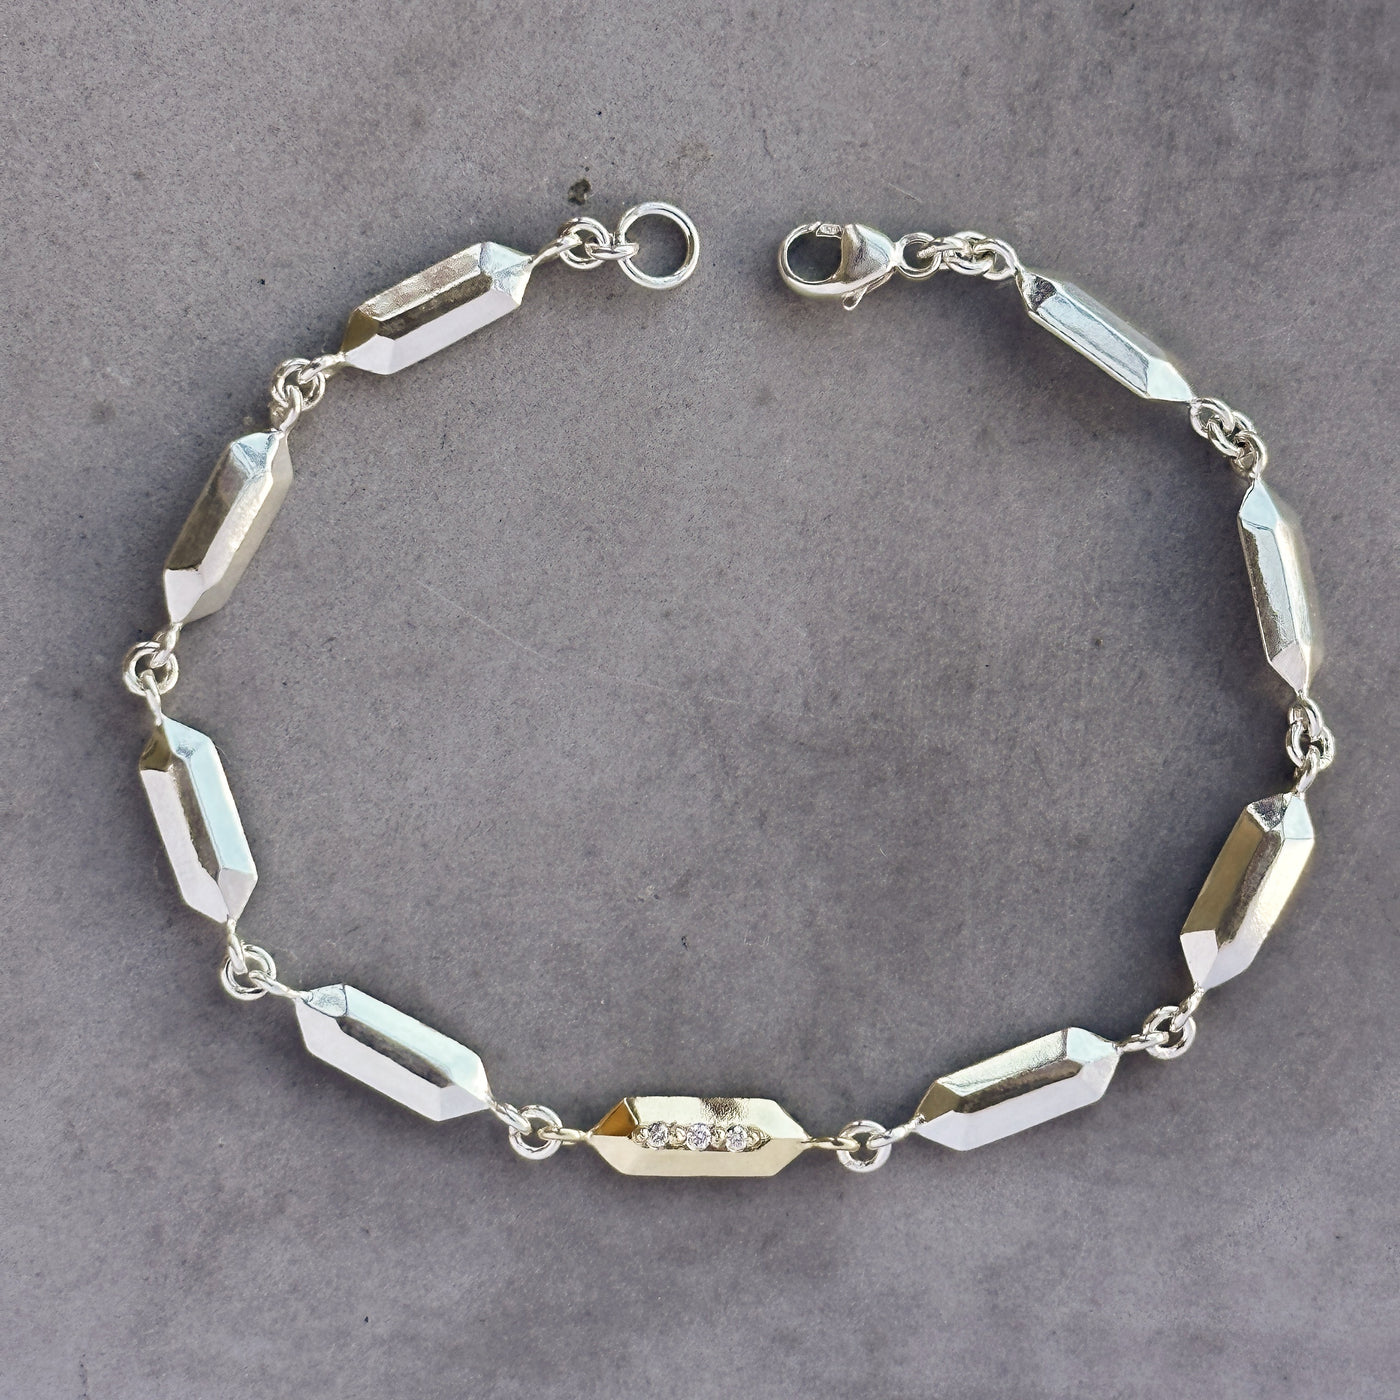 Fragment Link Bracelet with Gold Link on neutral gray background